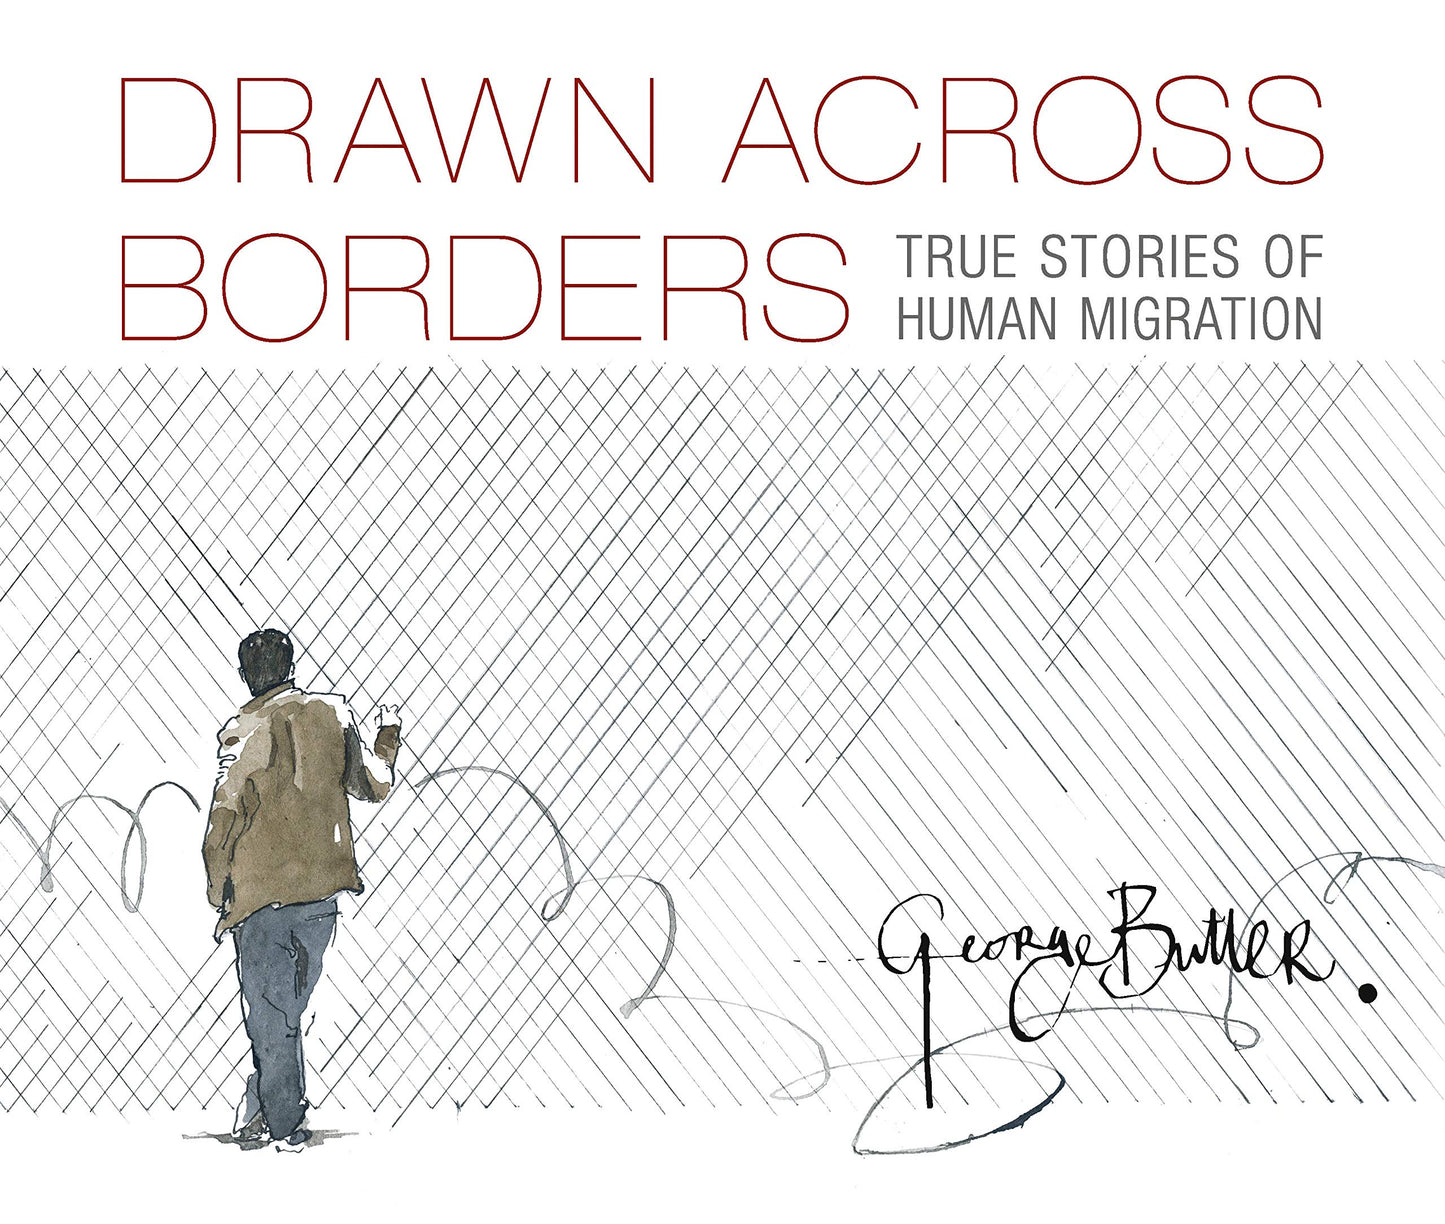 Drawn Across Borders